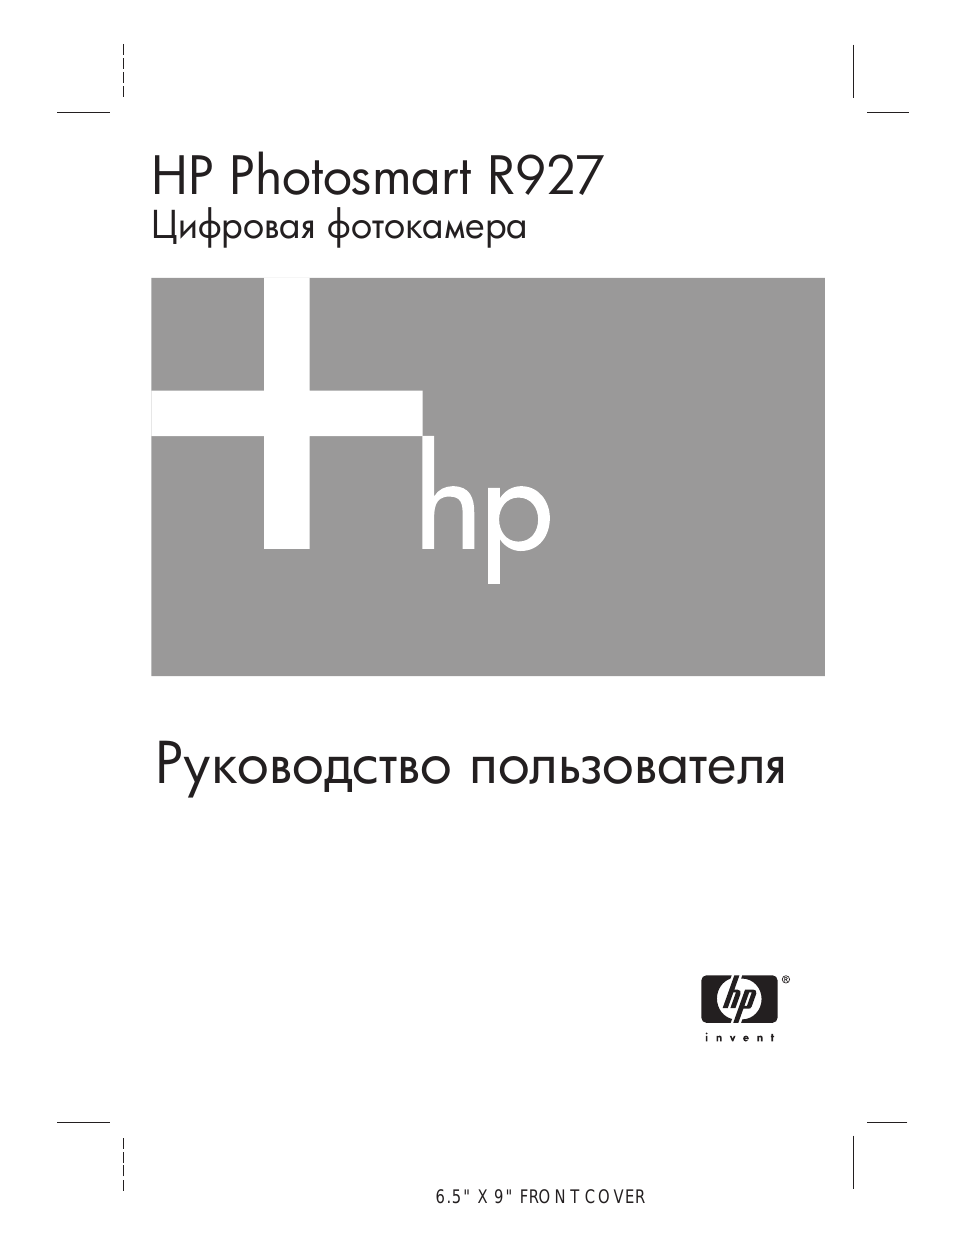 Инструкция по эксплуатации HP Photosmart R927 | 68 страниц